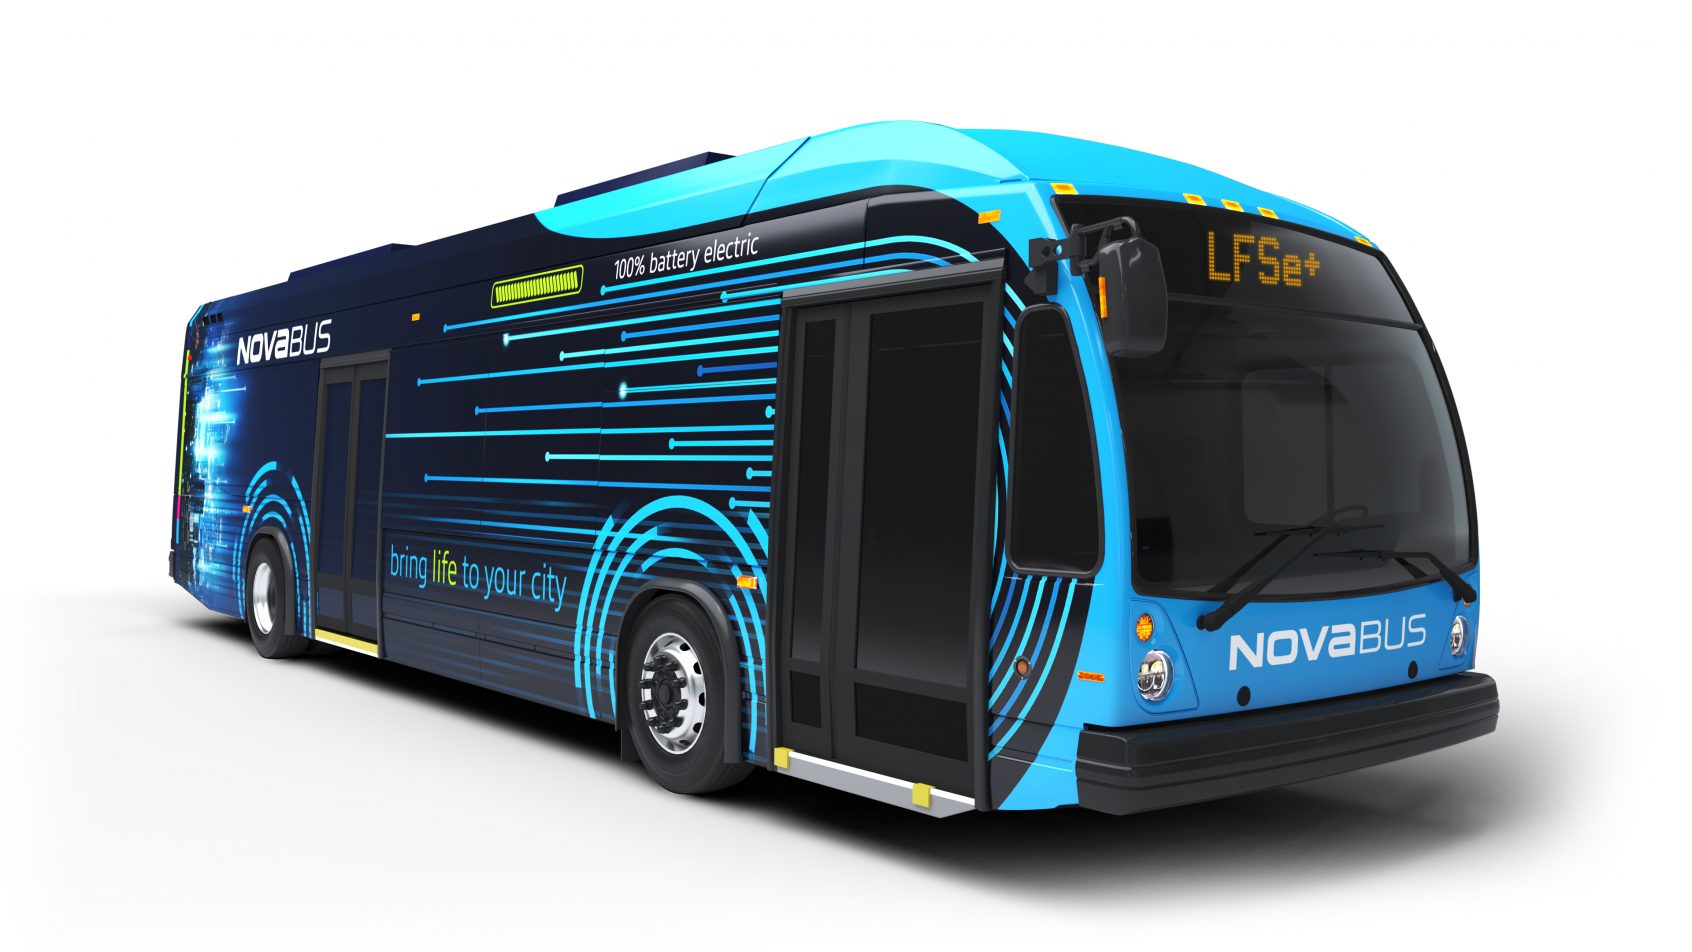 nova bus LFSe+